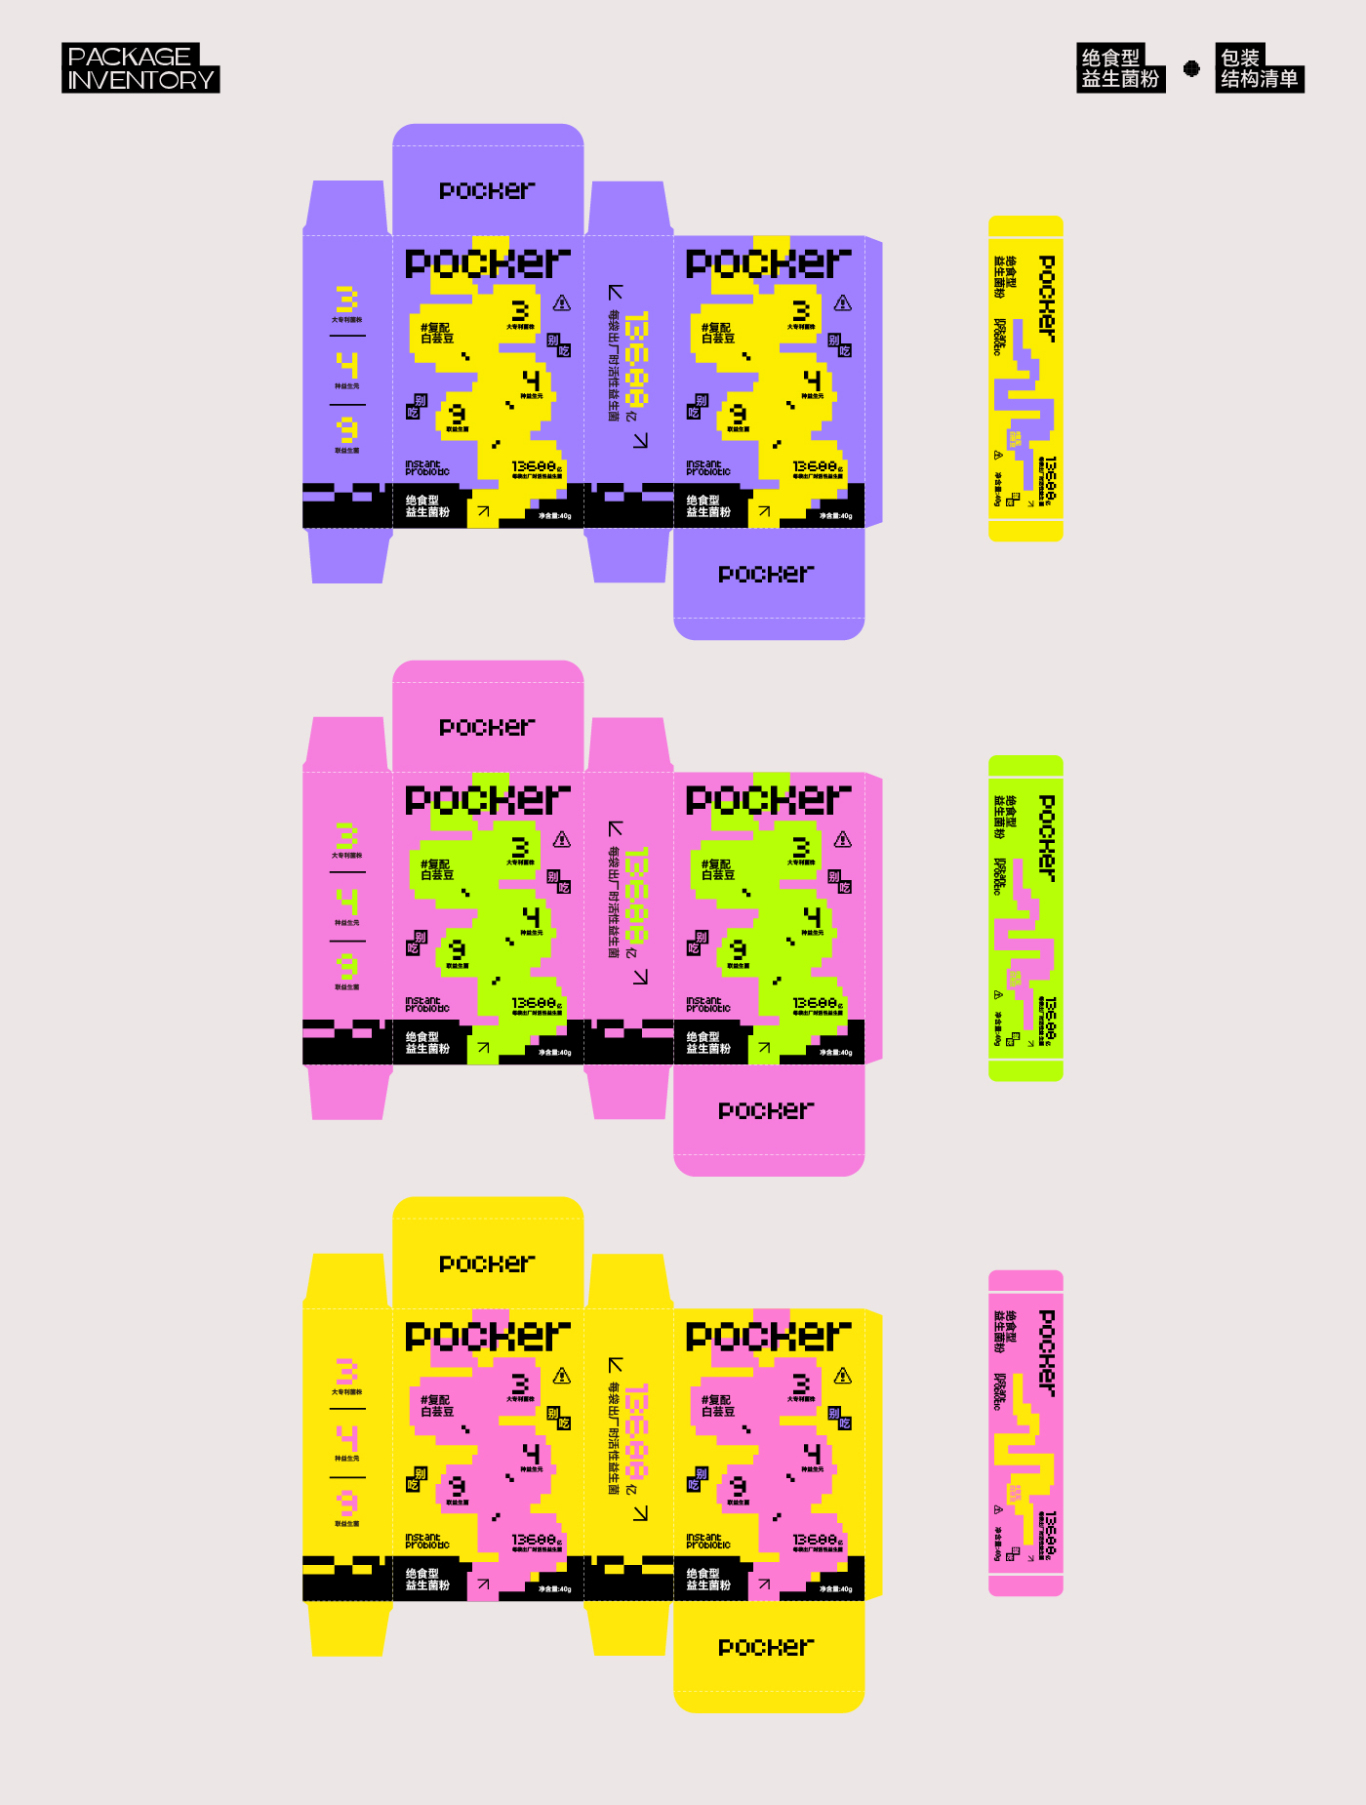 POCKER X 绝食型肠道卫士·别吃别吃丨益生菌包装设计图2